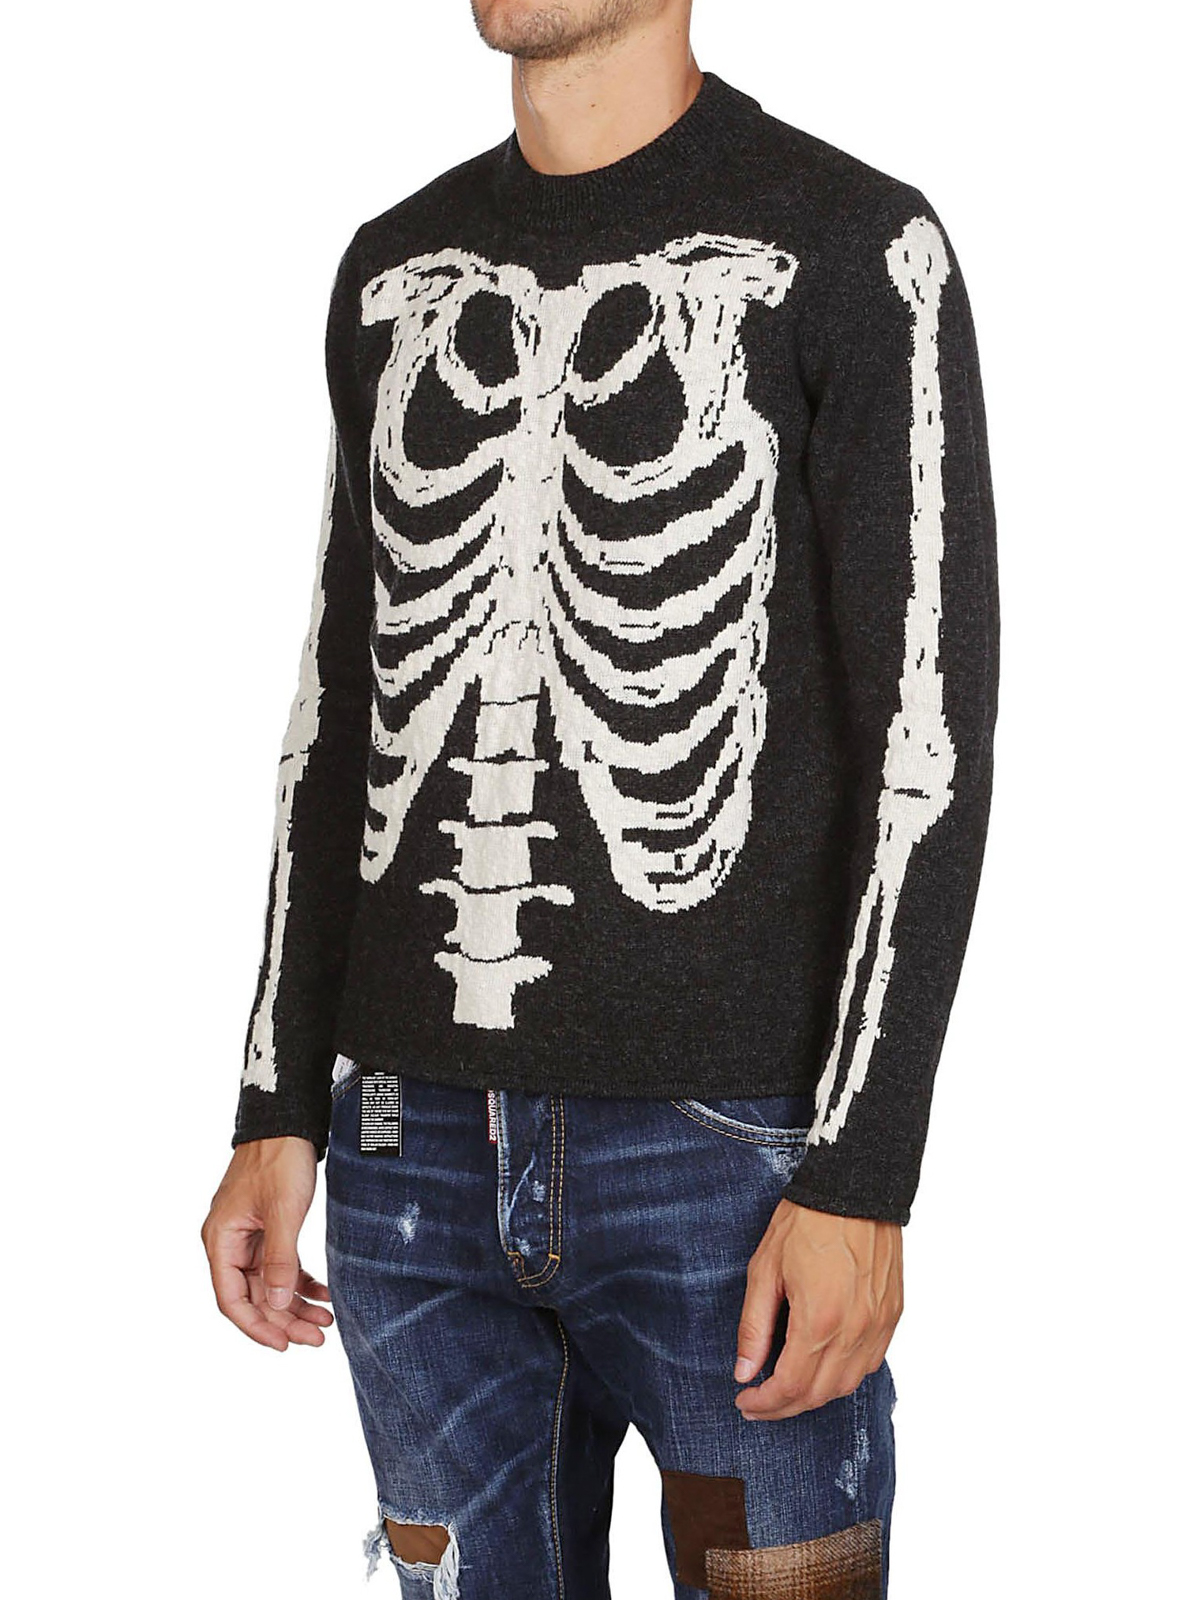 Buy > saint laurent skeleton shirt > in stock